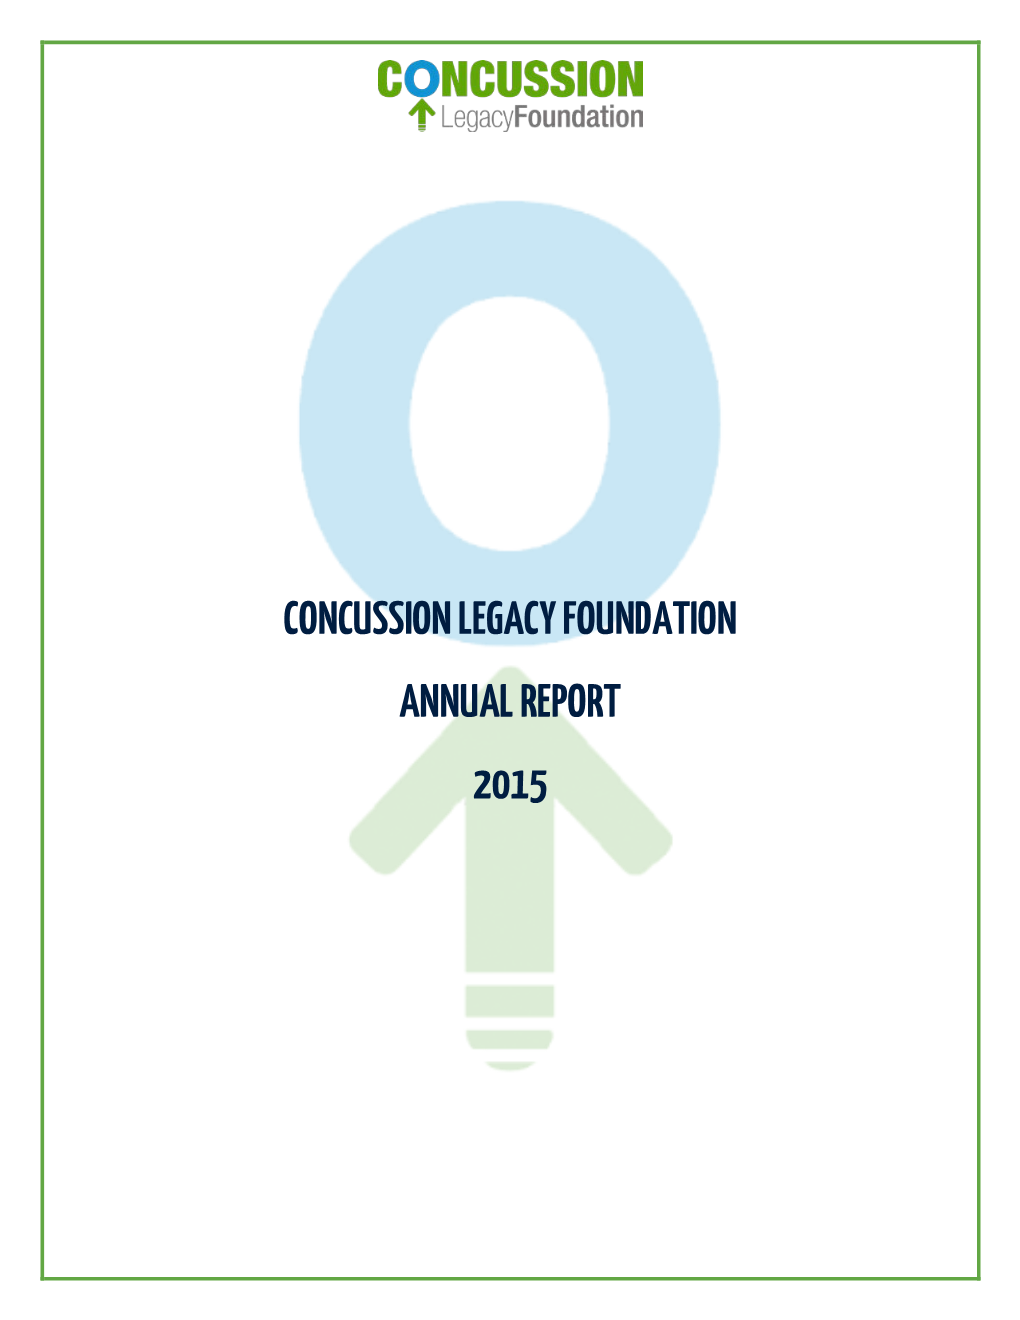 Concussion Legacy Foundation Annual Report 2015